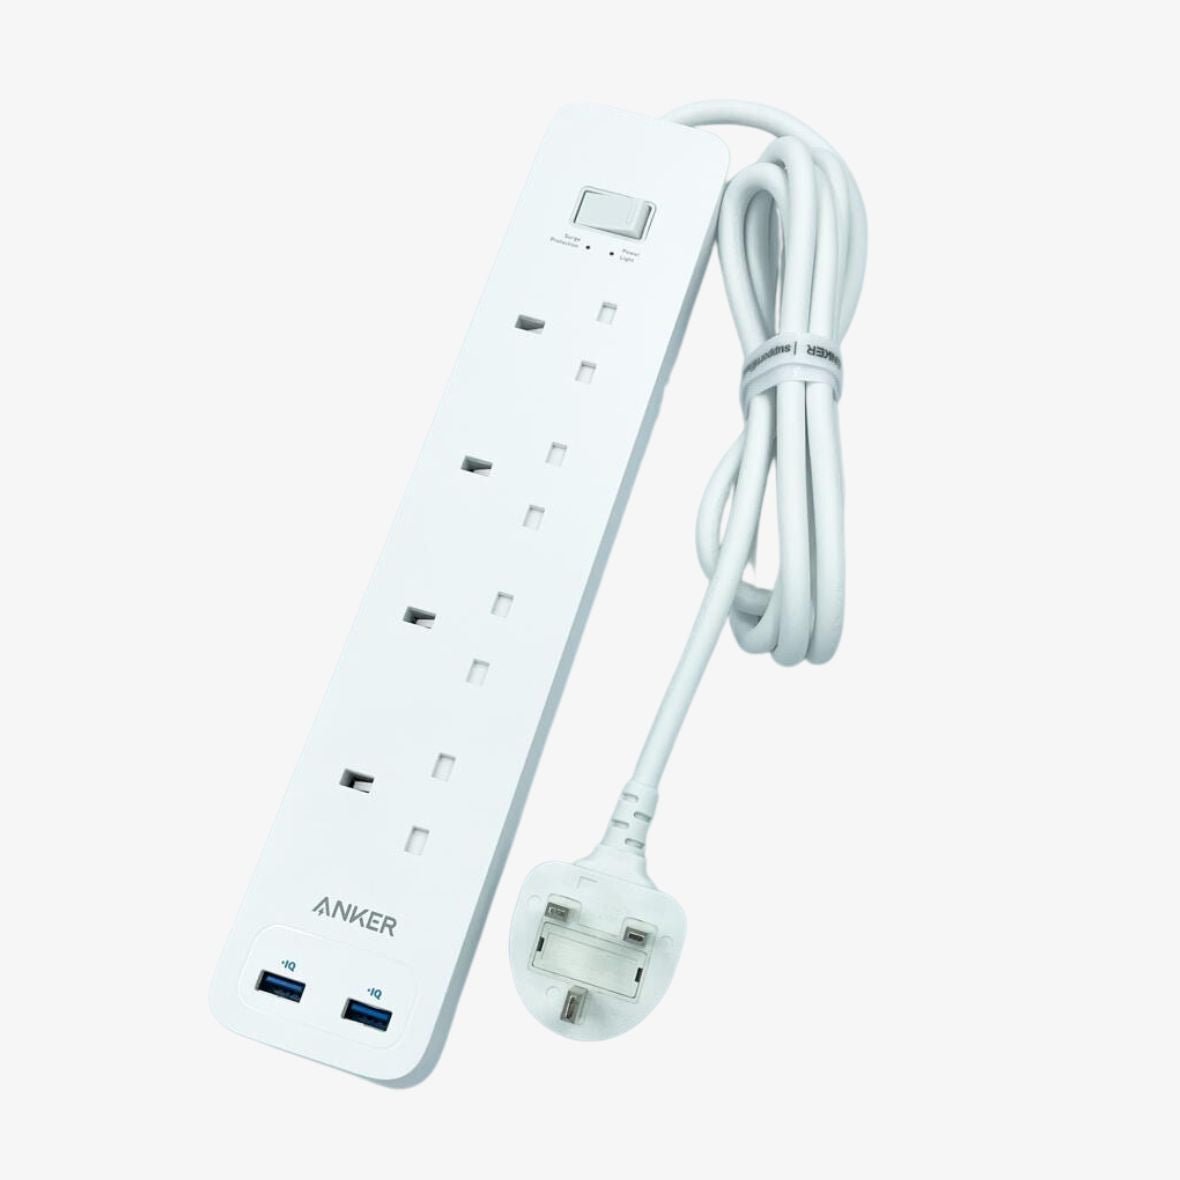 Anker 322 USB Power Strip 6 in 1 A9142K21 - White